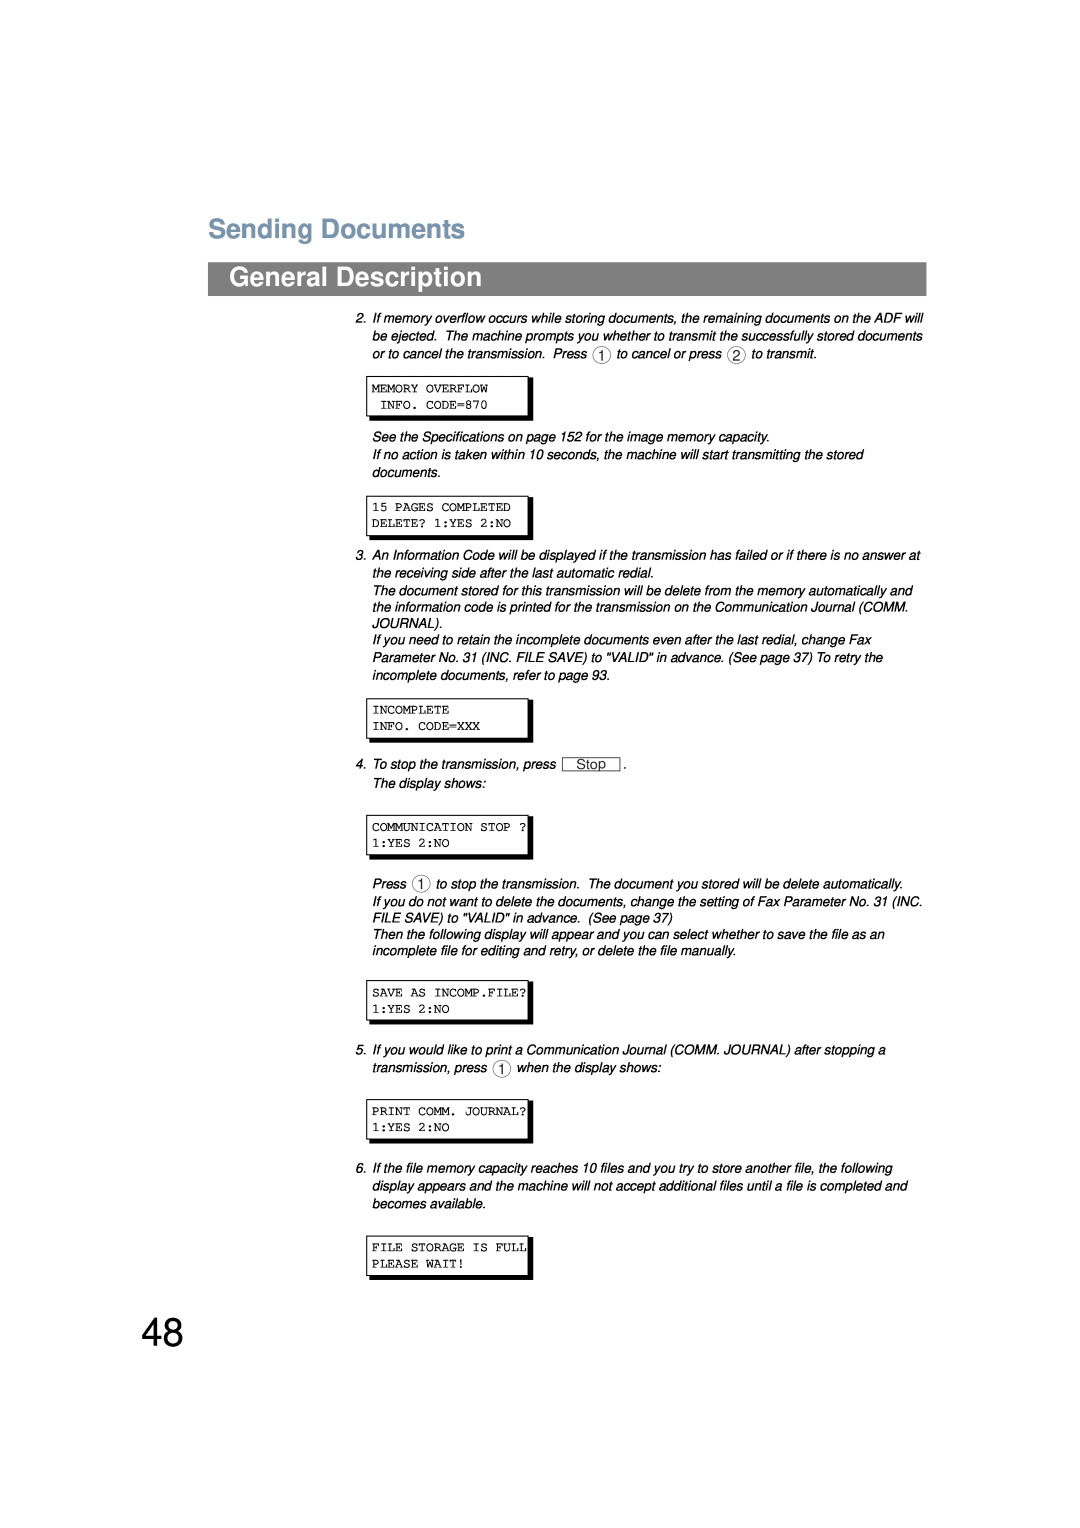 Panasonic UF-6200 operating instructions Sending Documents, General Description 